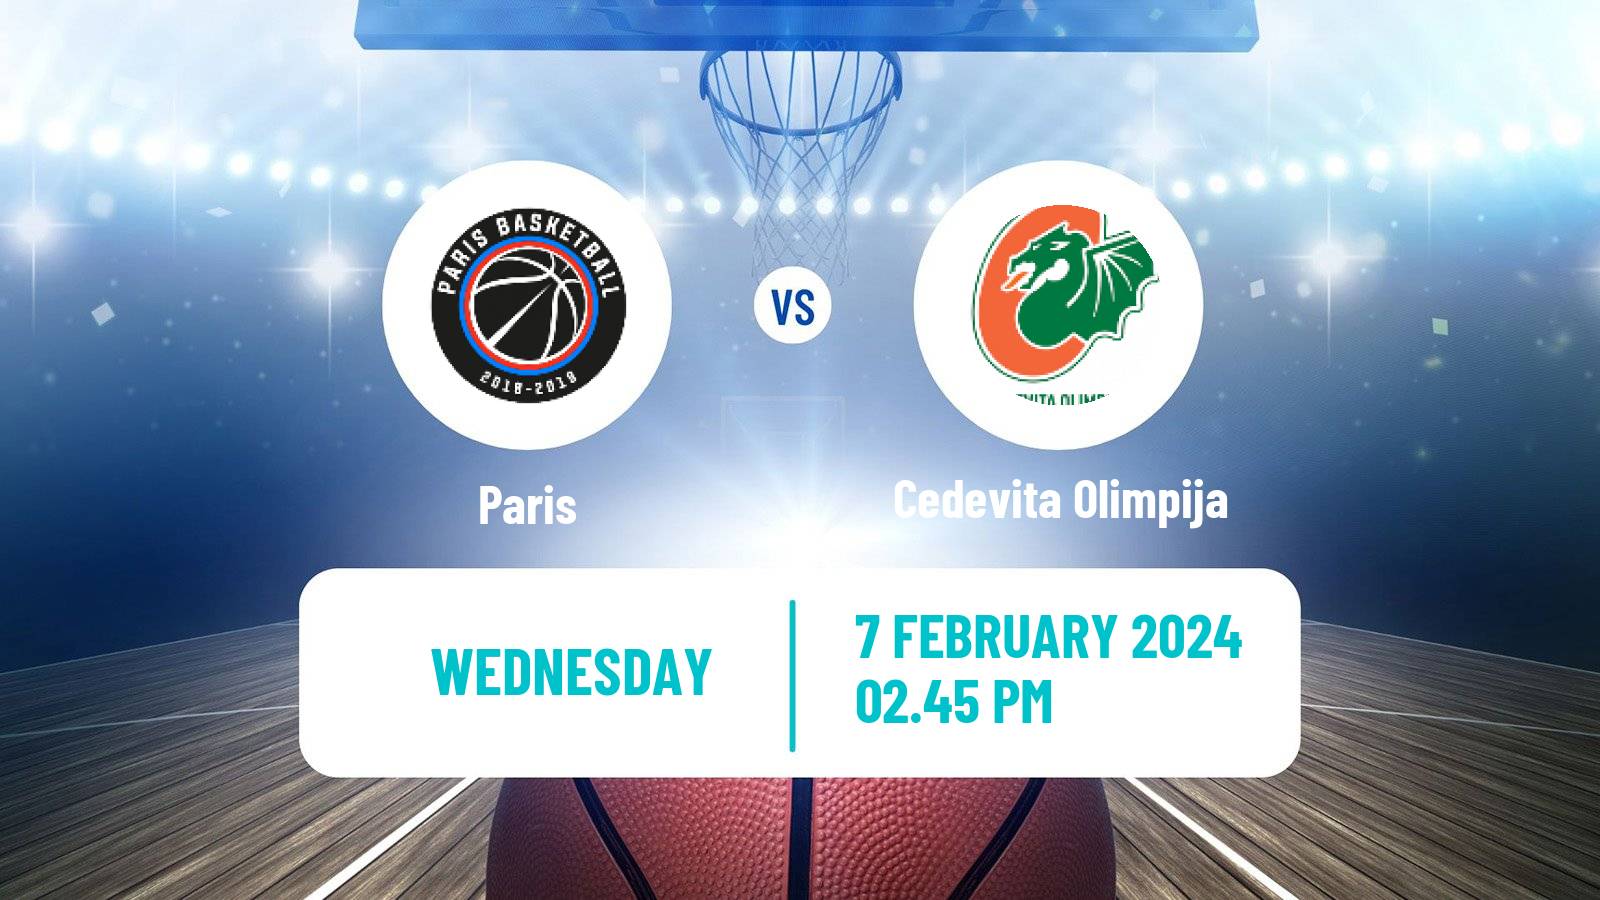 Basketball Eurocup Paris - Cedevita Olimpija